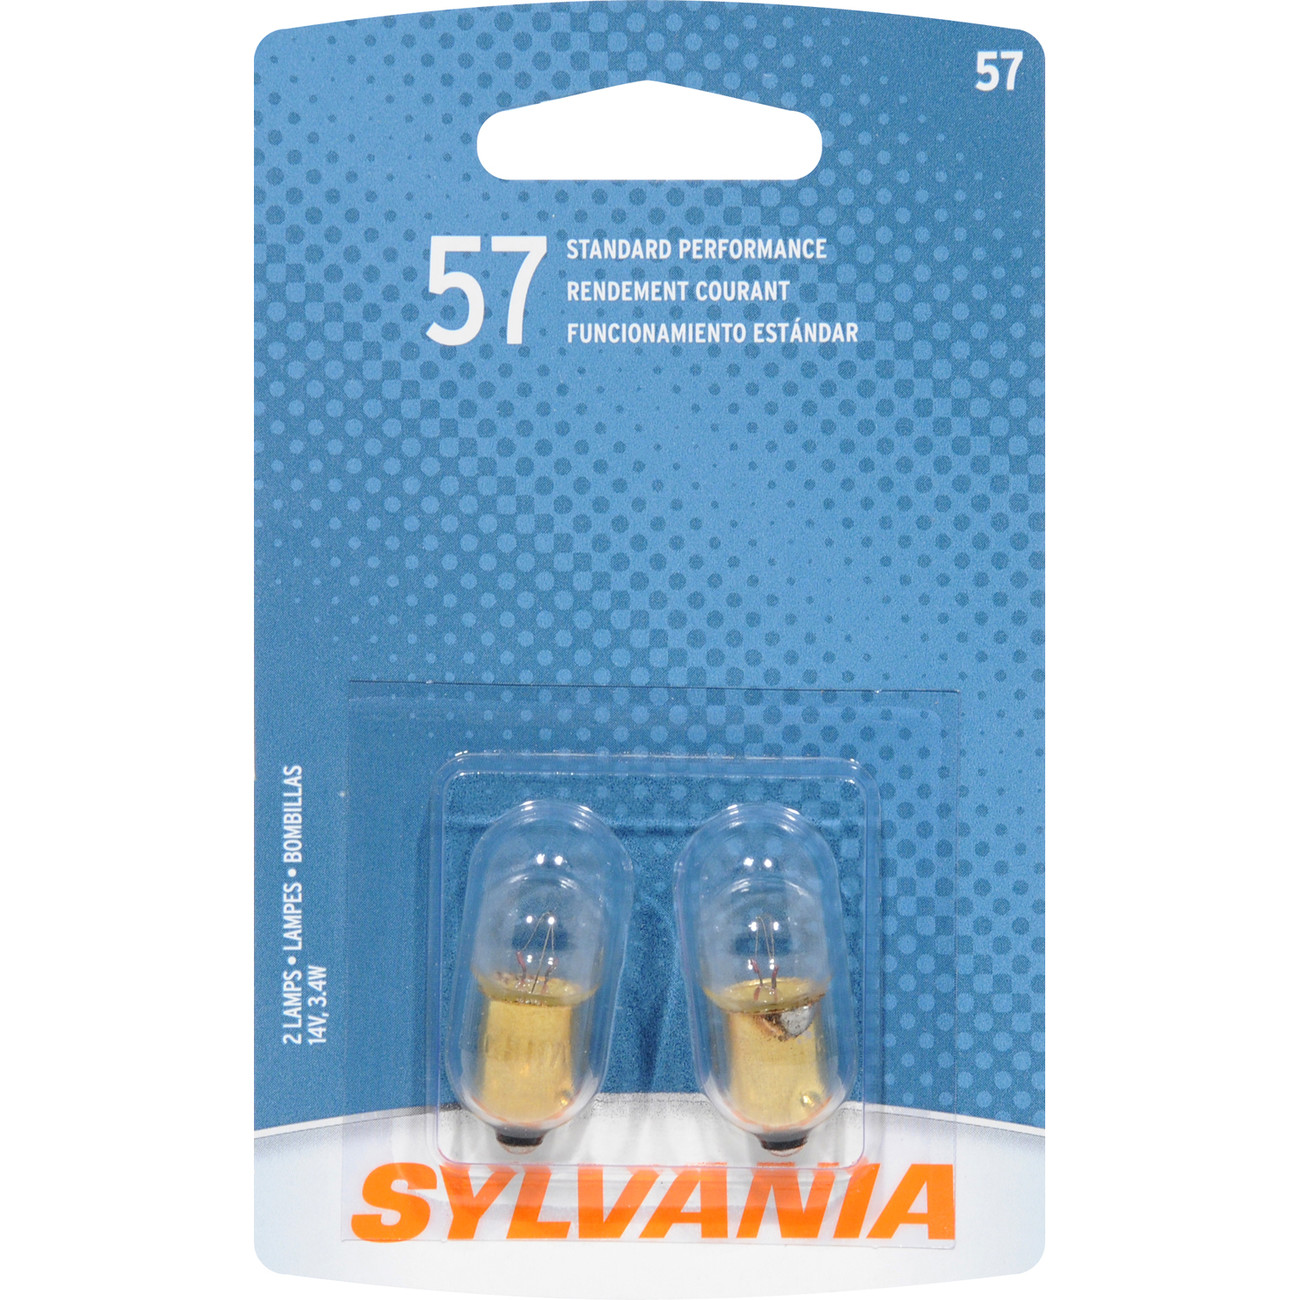 SYLVANIA RETAIL PACKS - Blister Pack Twin Ash Tray Light Bulb - SYR 57.BP2